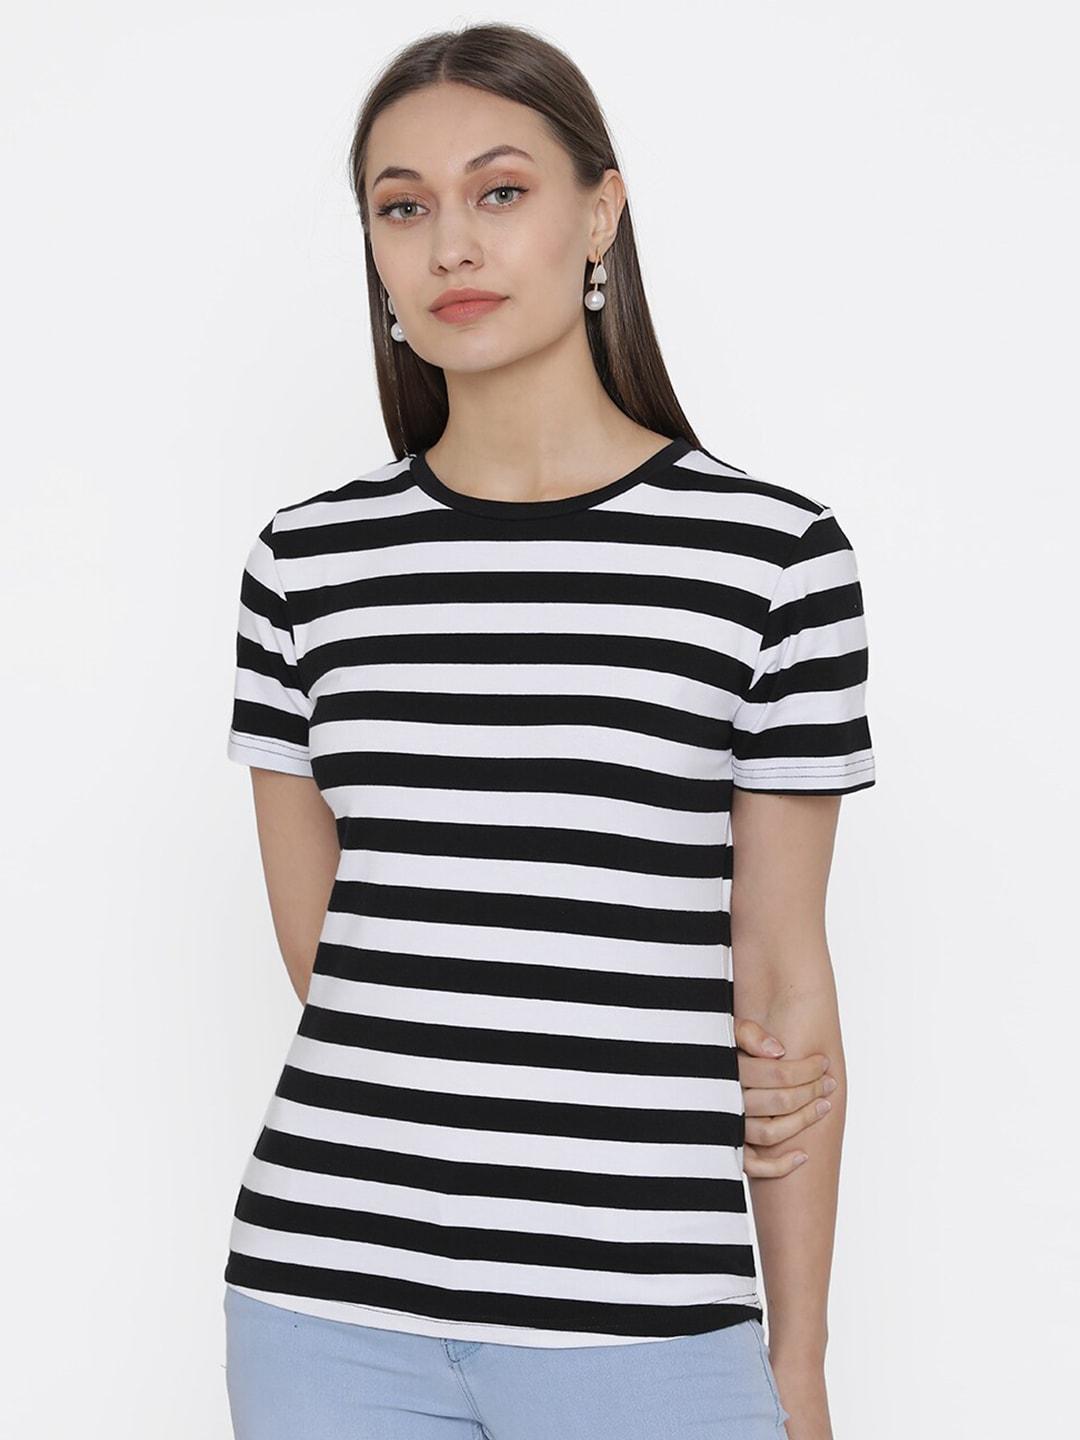 door74 women black & white striped cotton t-shirt